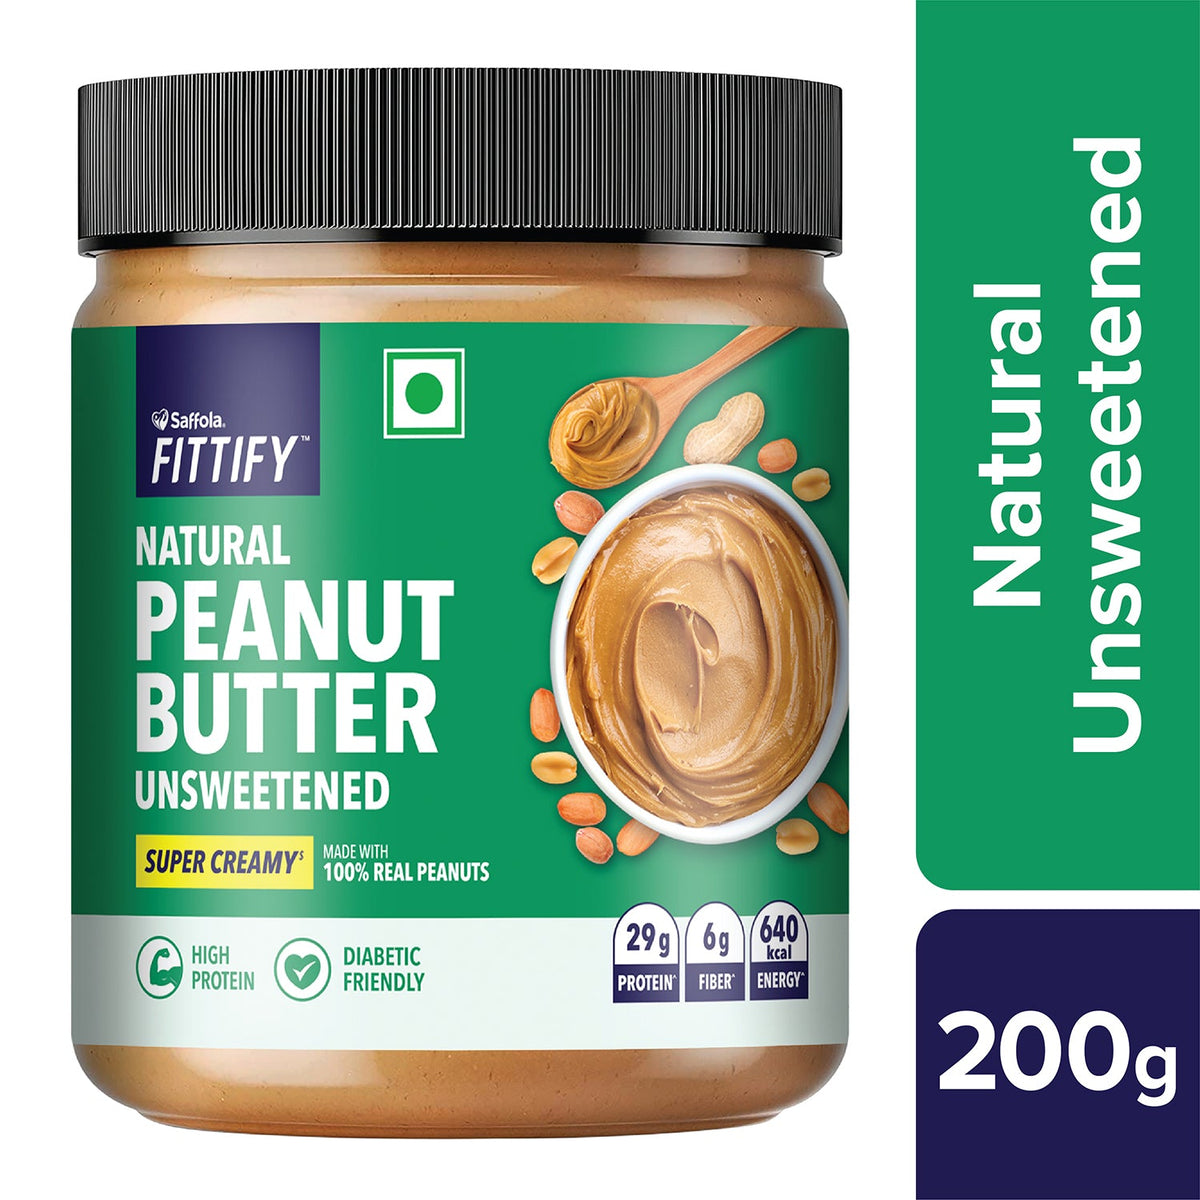 [SALE] Saffola Fittify Natural Peanut Butter Unsweetened Super Creamy 200g